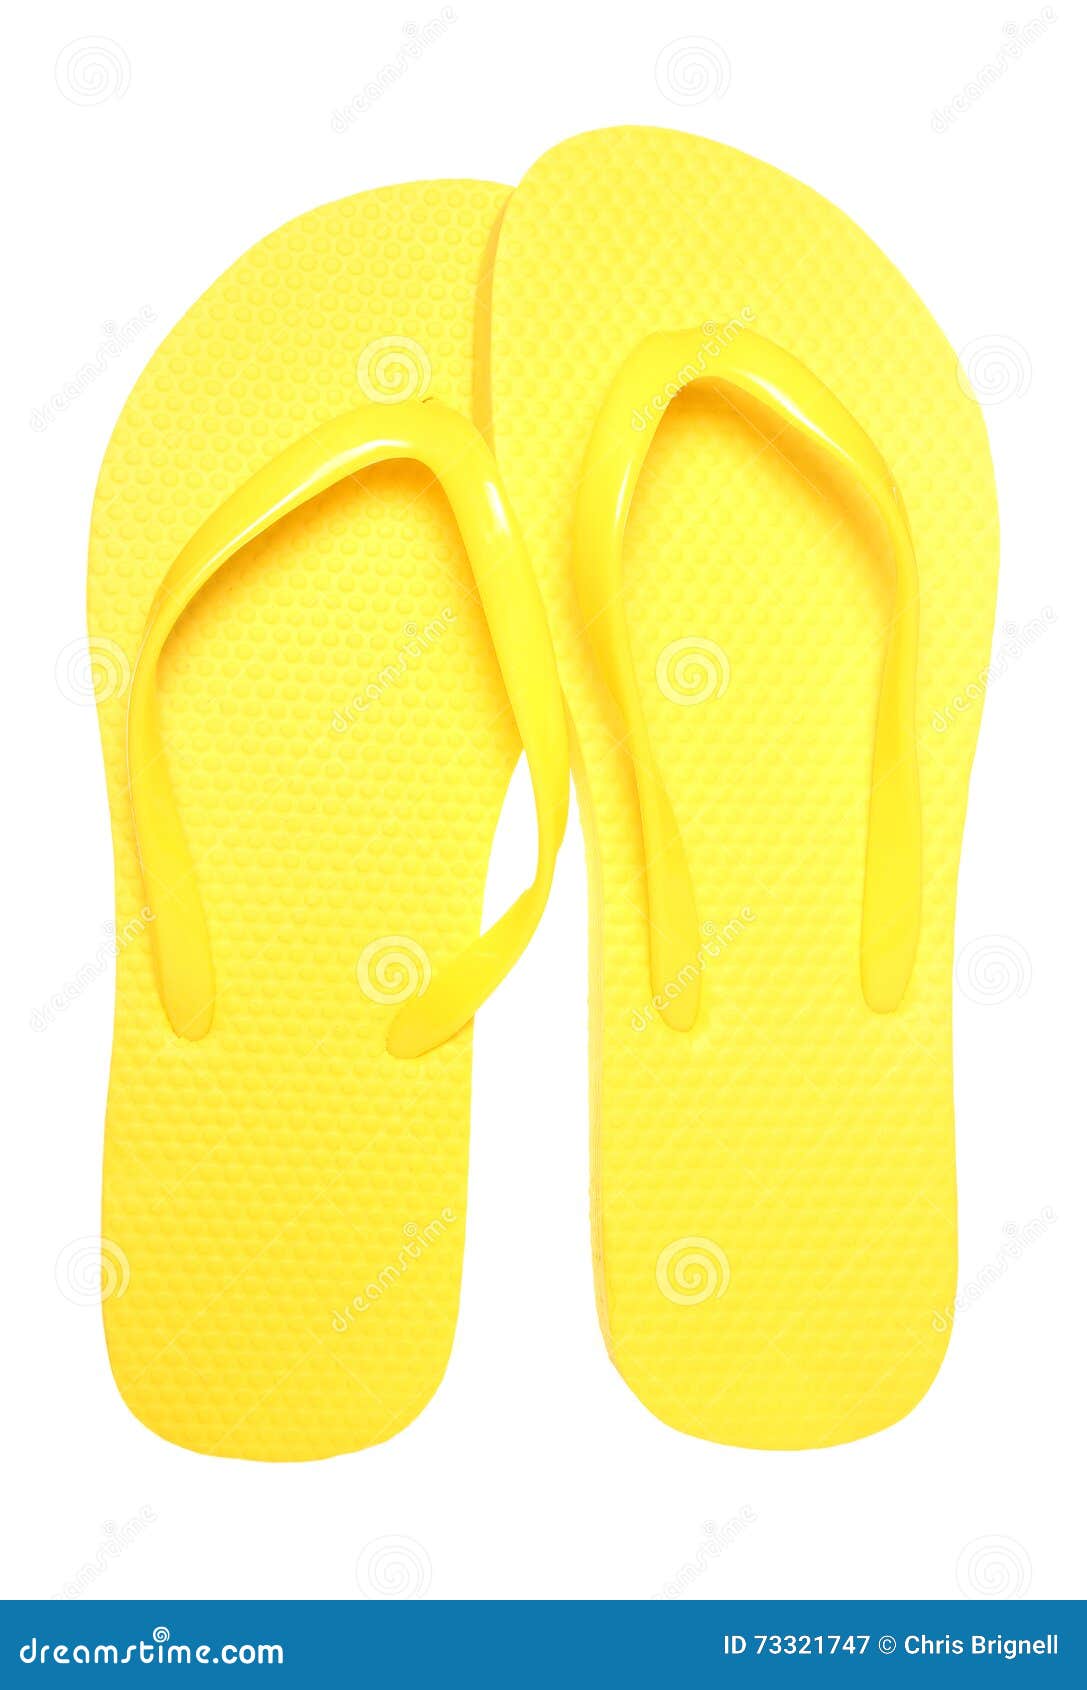 Pair of yellow flip flops stock image. Image of flops - 73321747